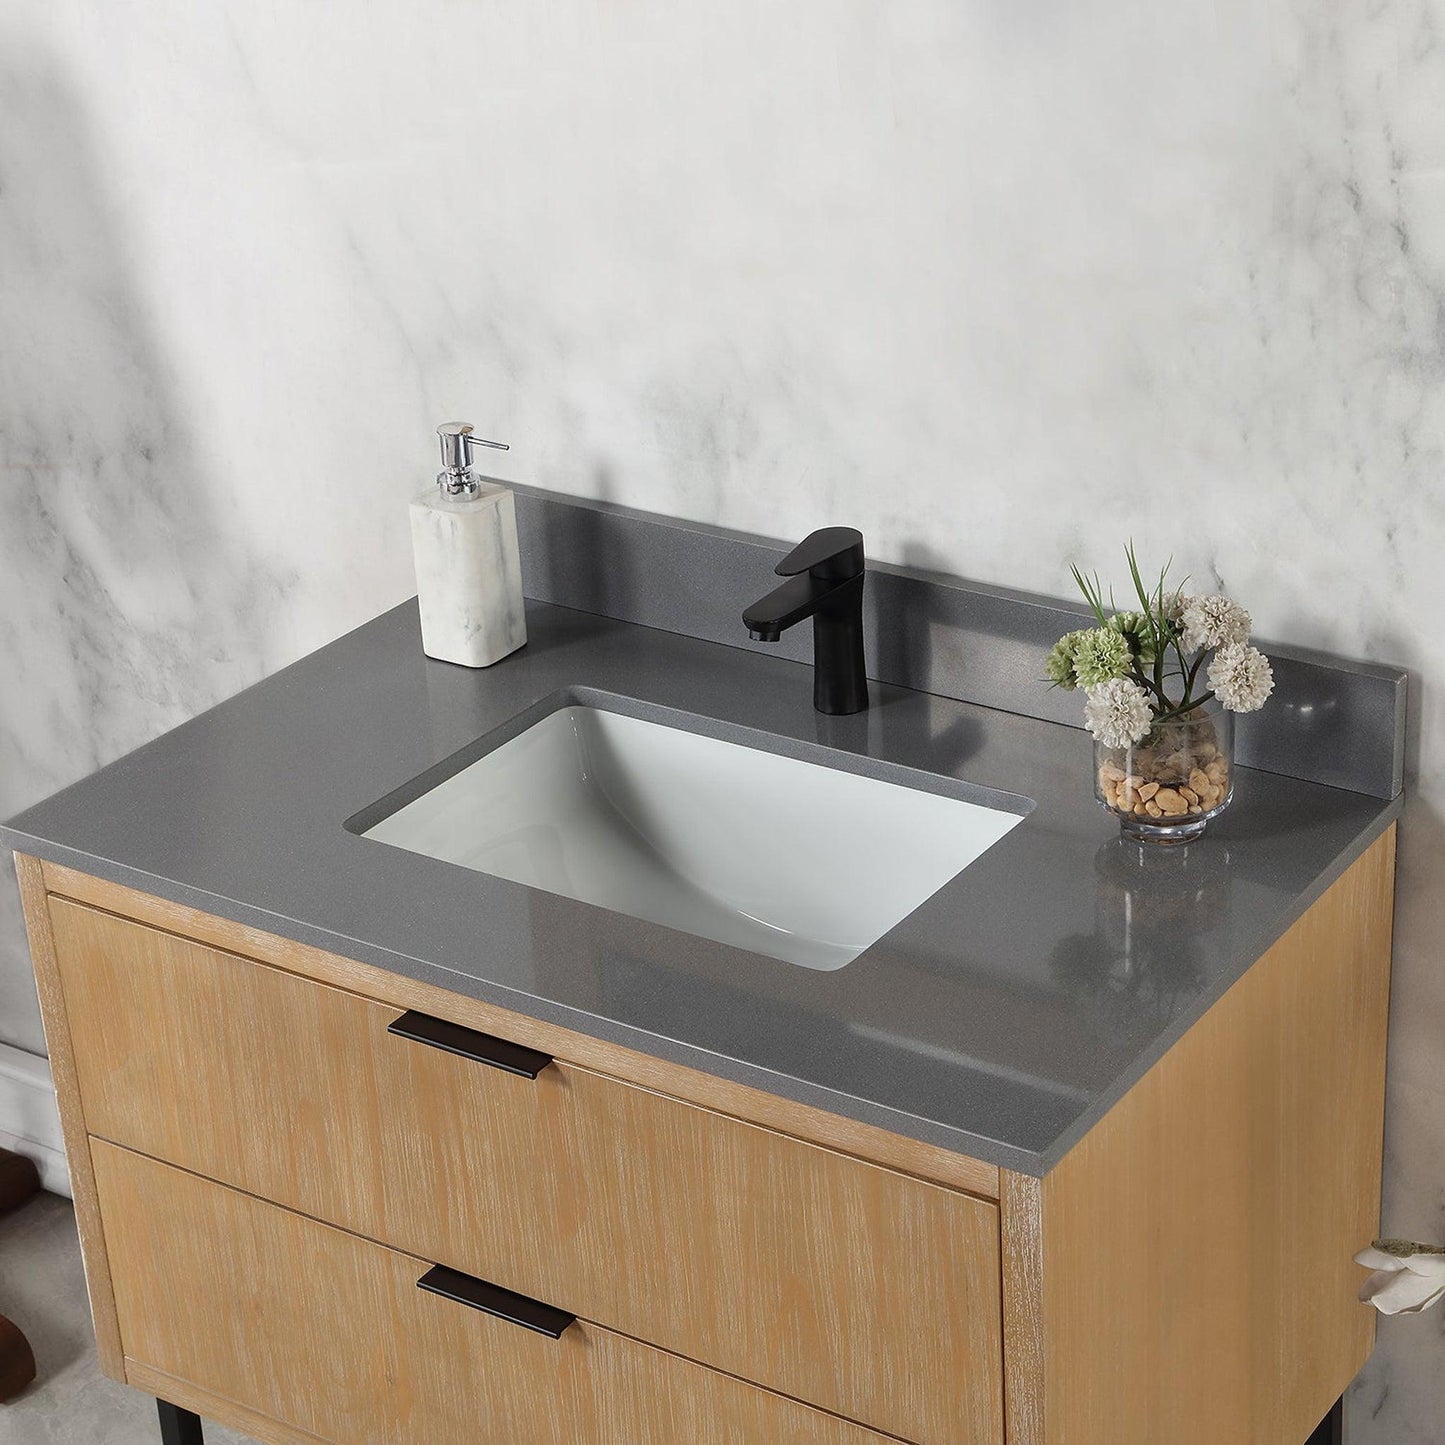 Altair Helios 36" Weathered Pine Freestanding Single Bathroom Vanity Set With Concrete Gray Composite Stone Top, Single Rectangular Undermount Ceramic Sink, Overflow, and Backsplash